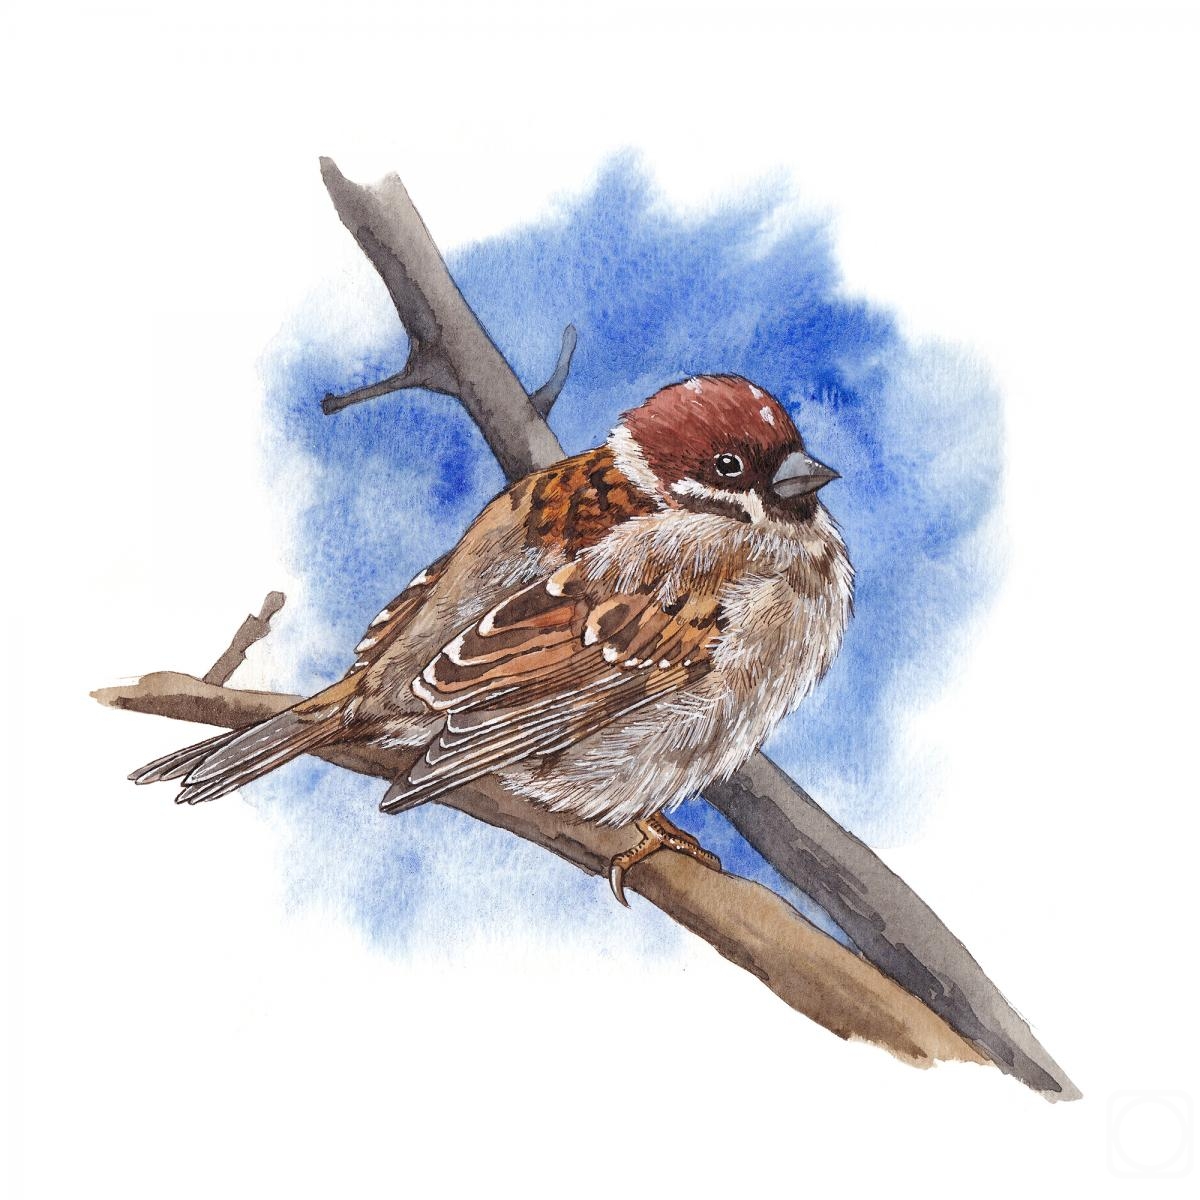 Prokazyuk Anastasiya. Sparrow on a branch